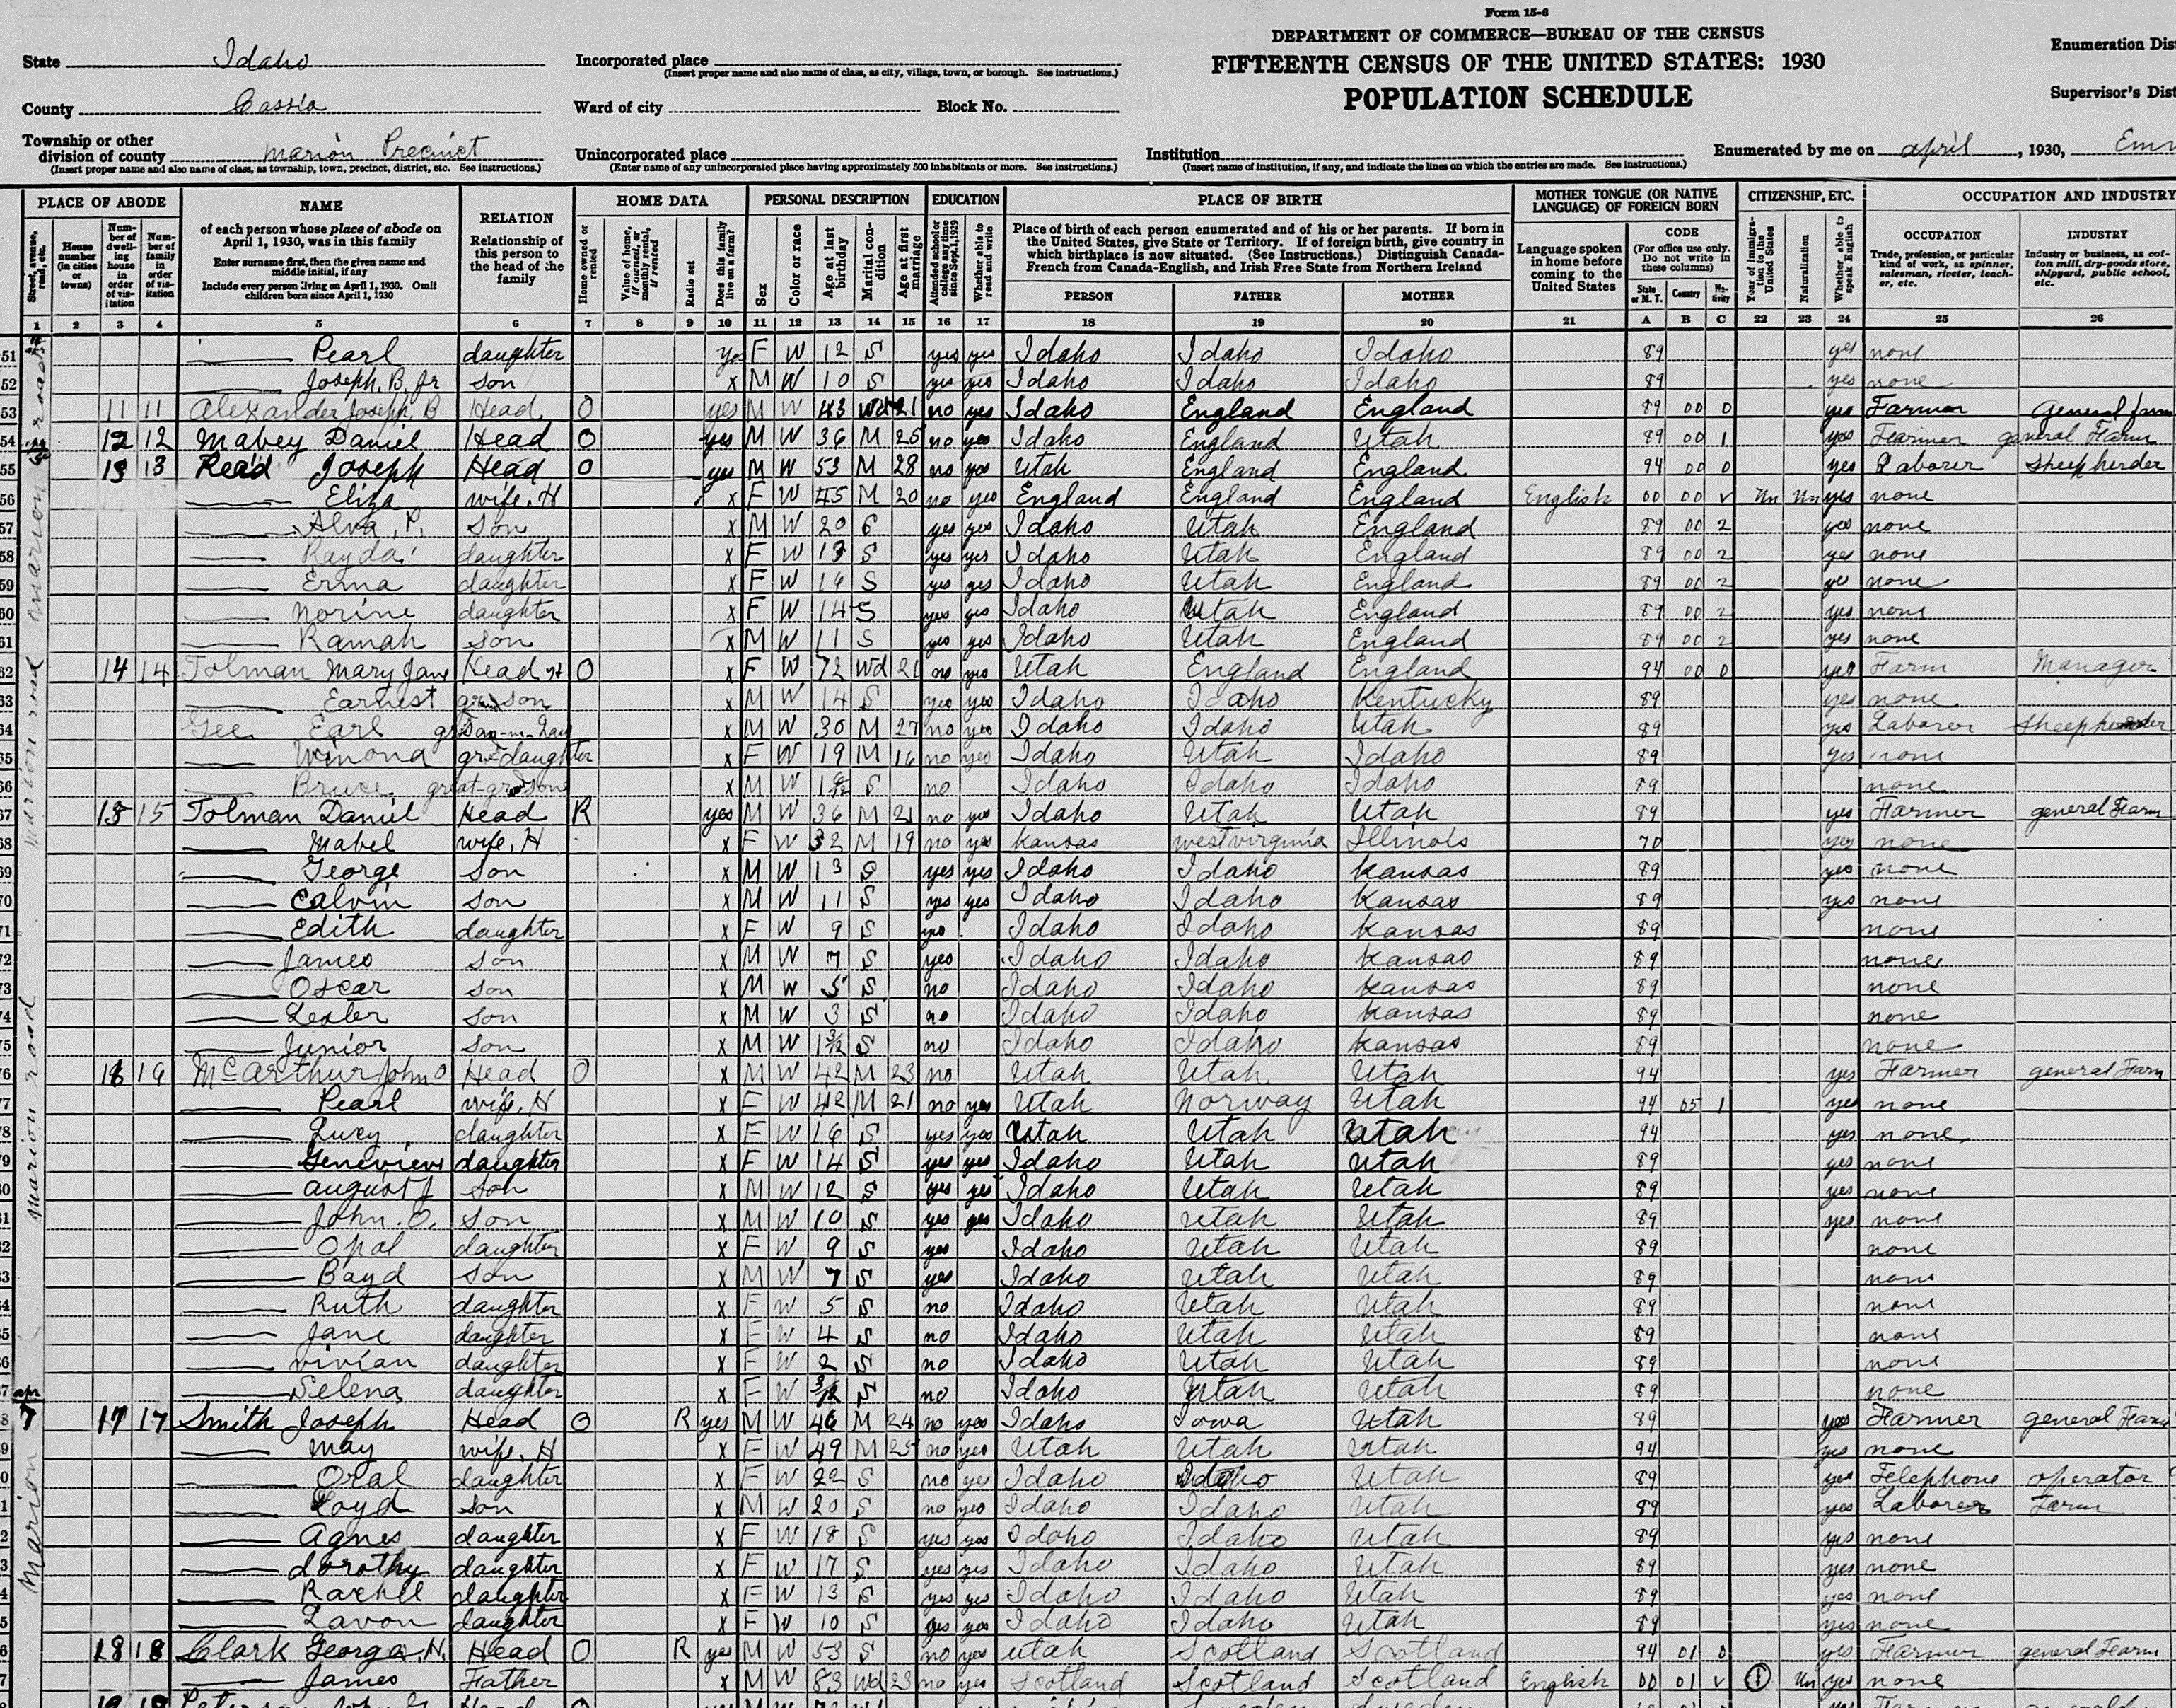 1930 U.S. Census record for Joshua Alvin Tolman, Mary Jane Gorringe, and Family